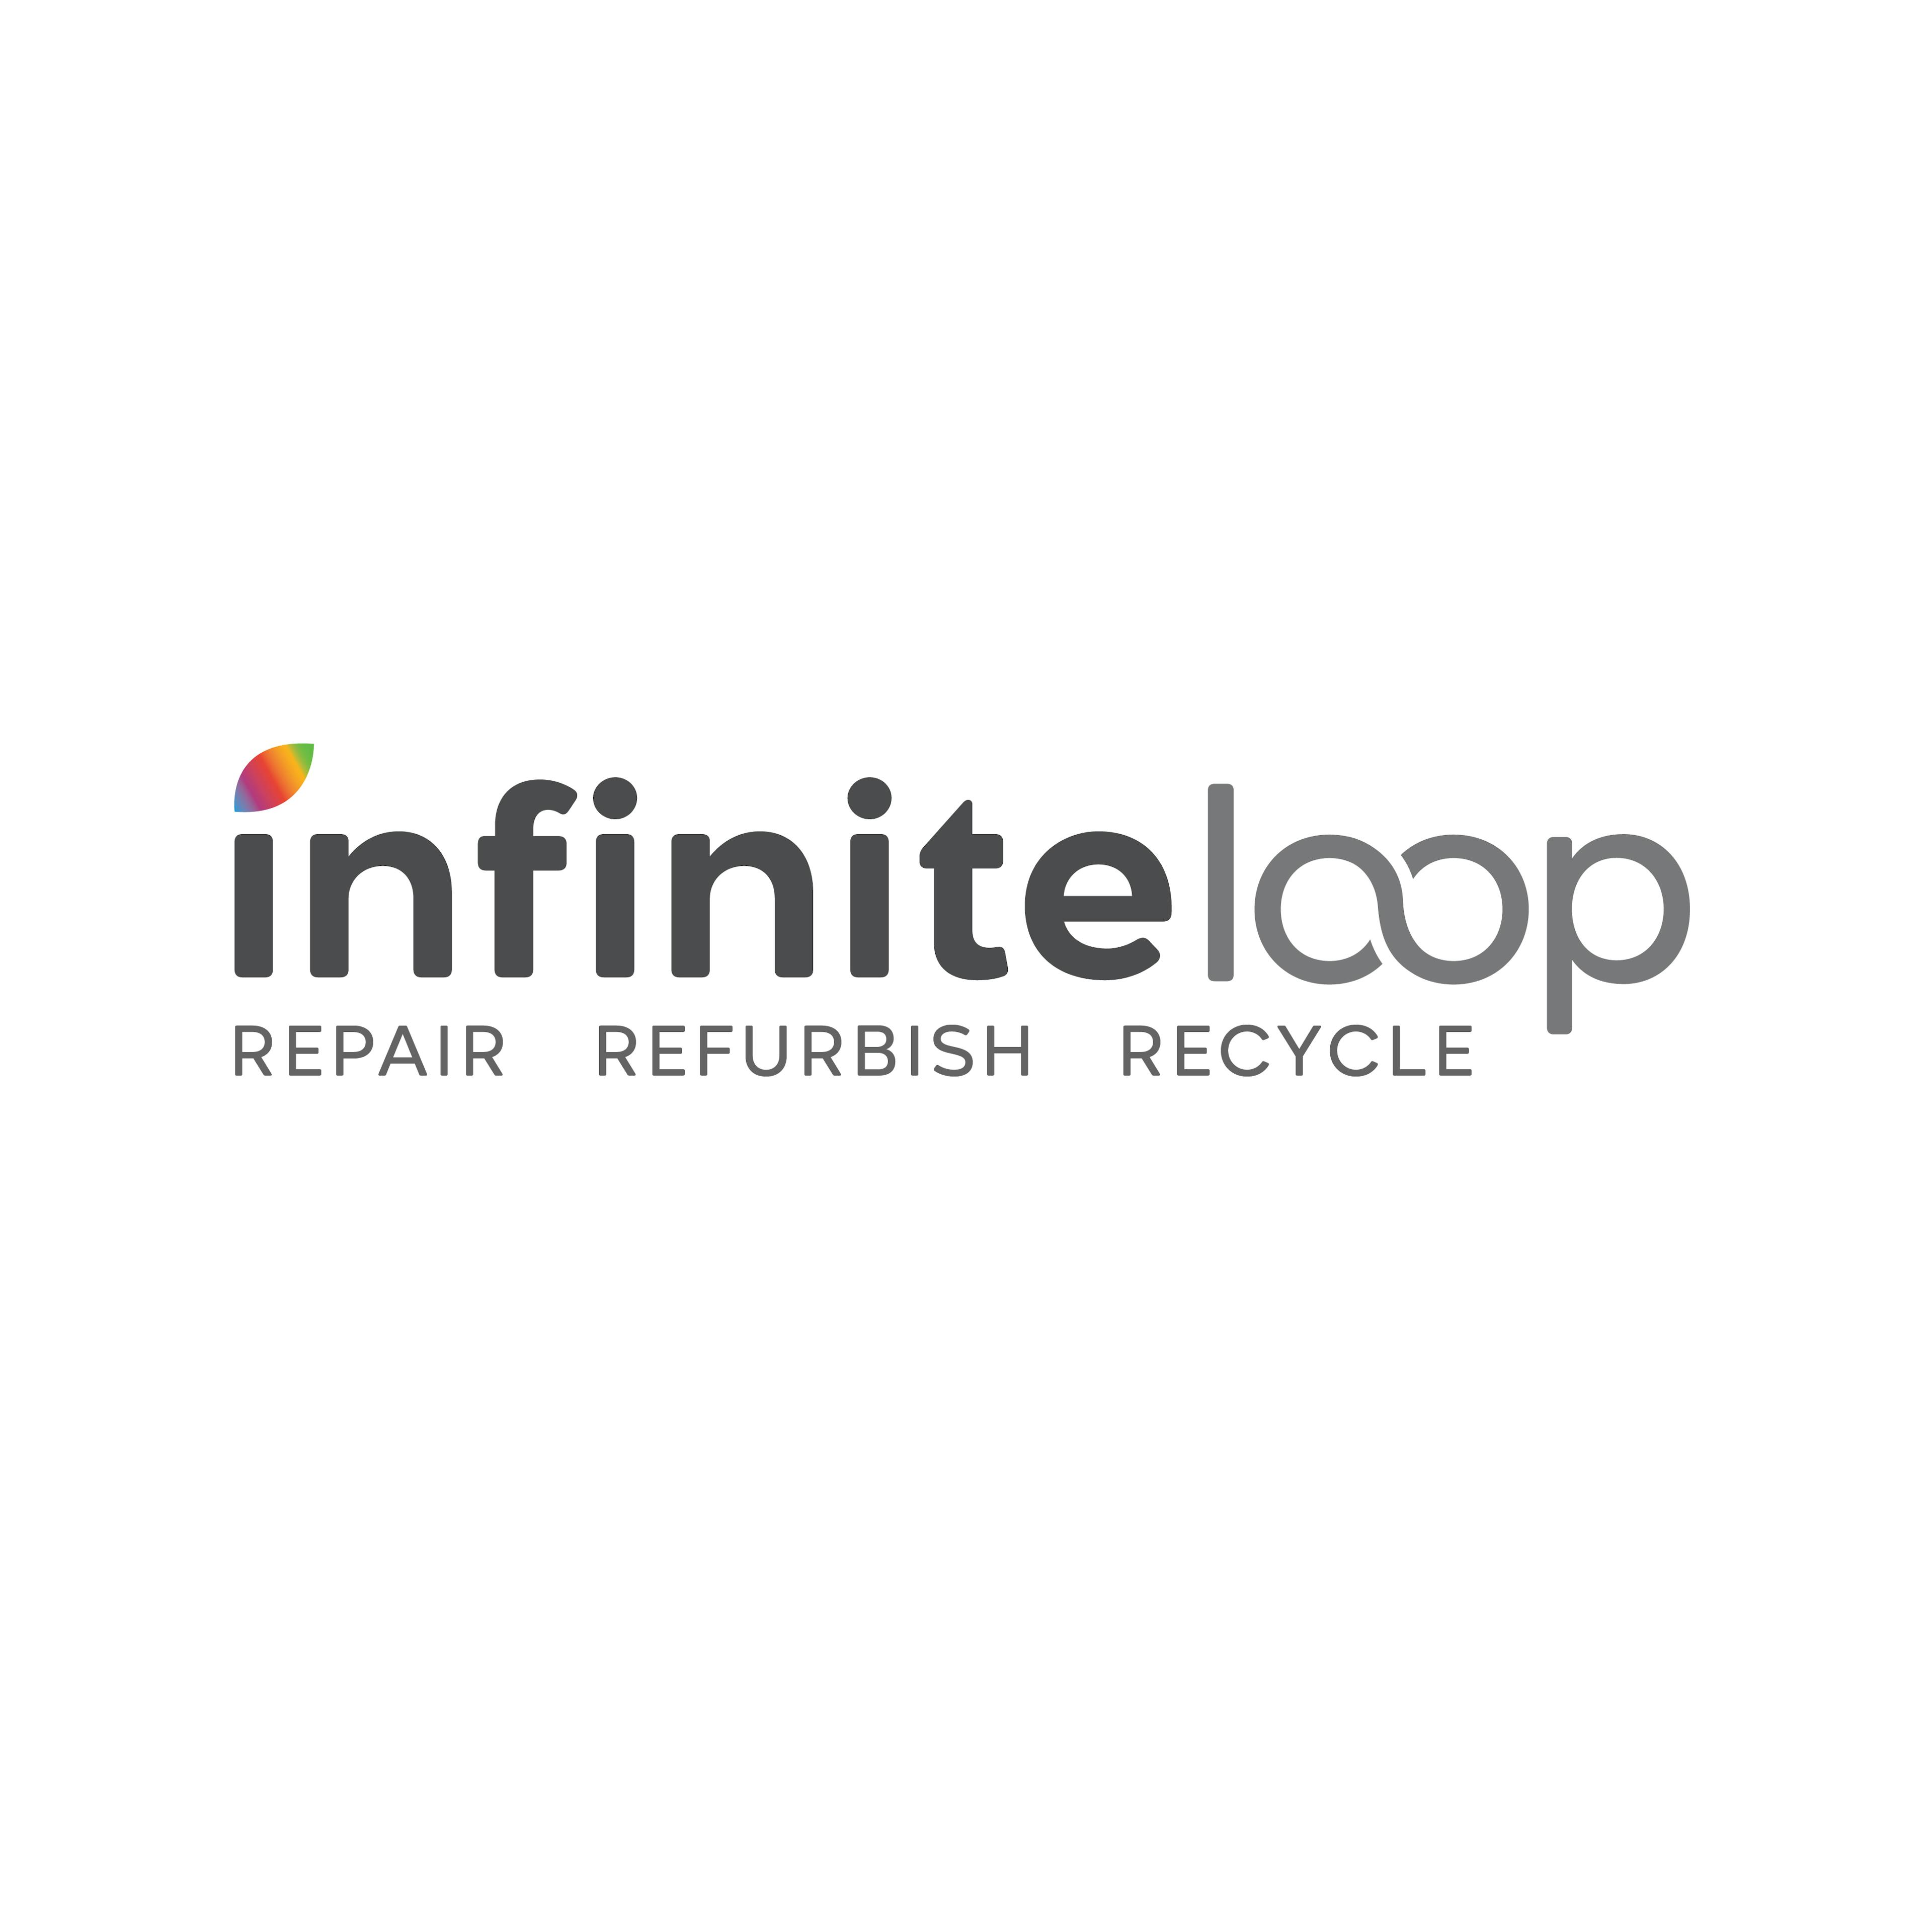 Logo Infinite loop